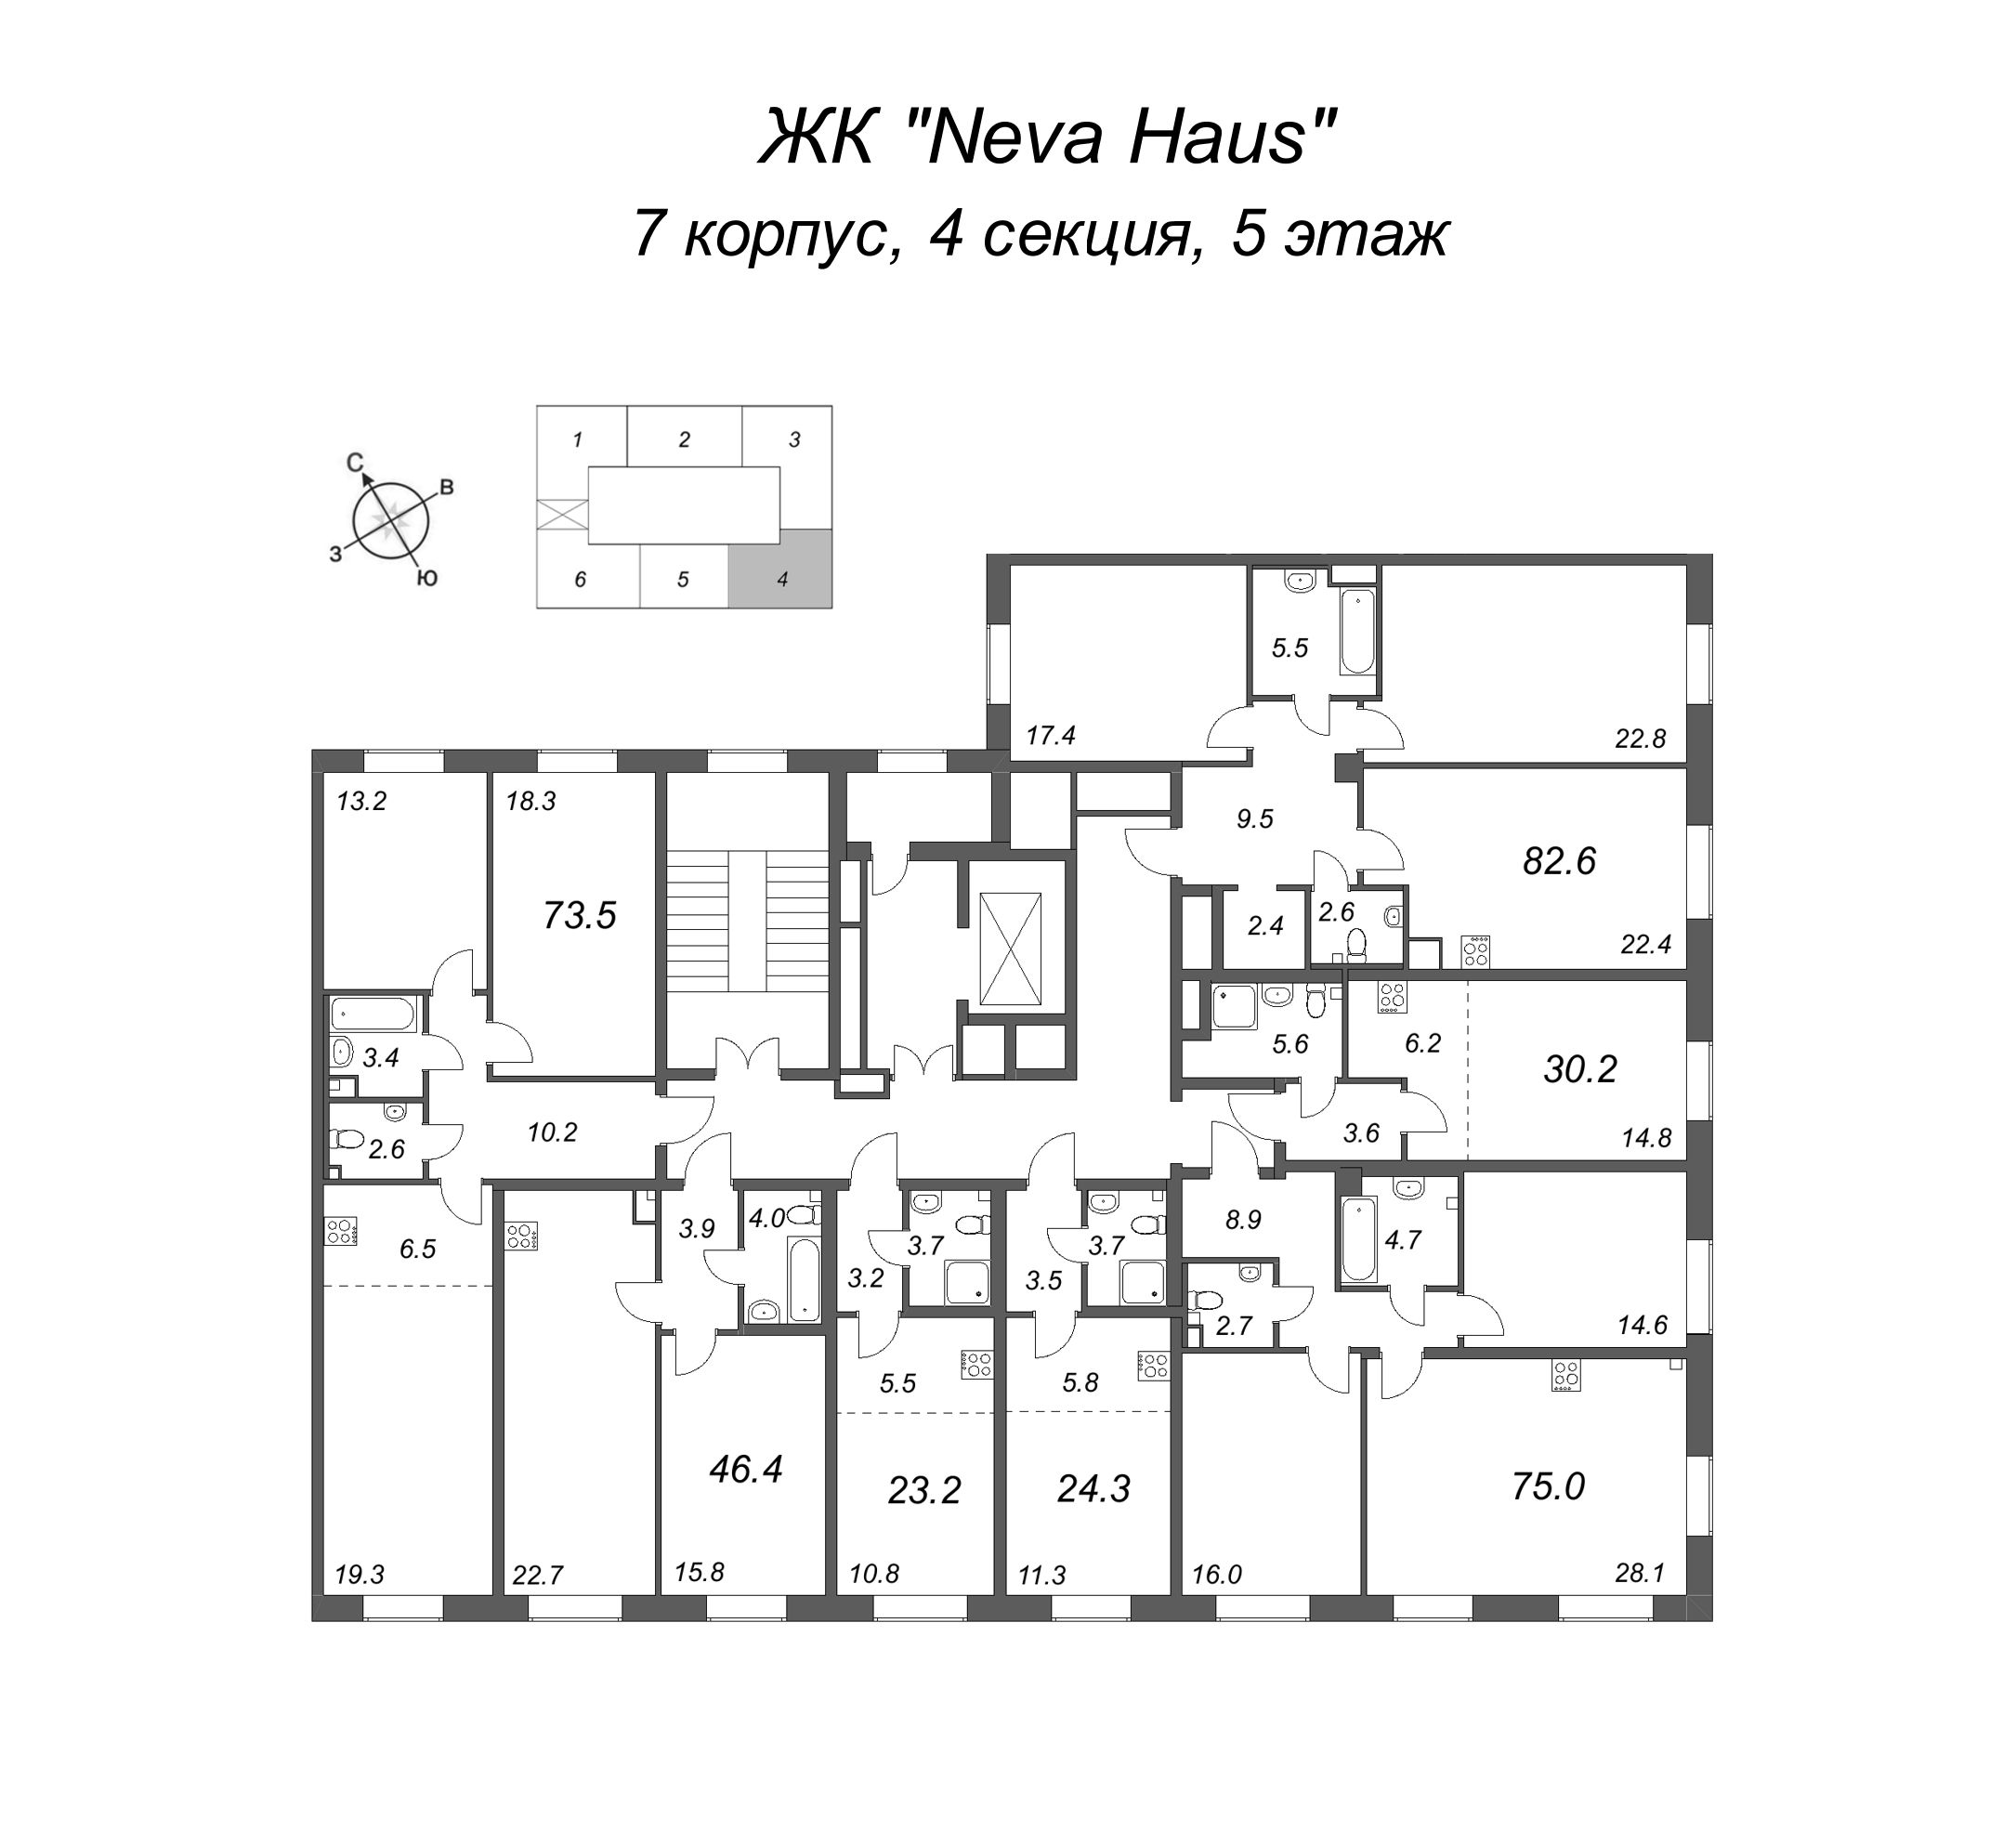 3-комнатная (Евро) квартира, 75.1 м² - планировка этажа